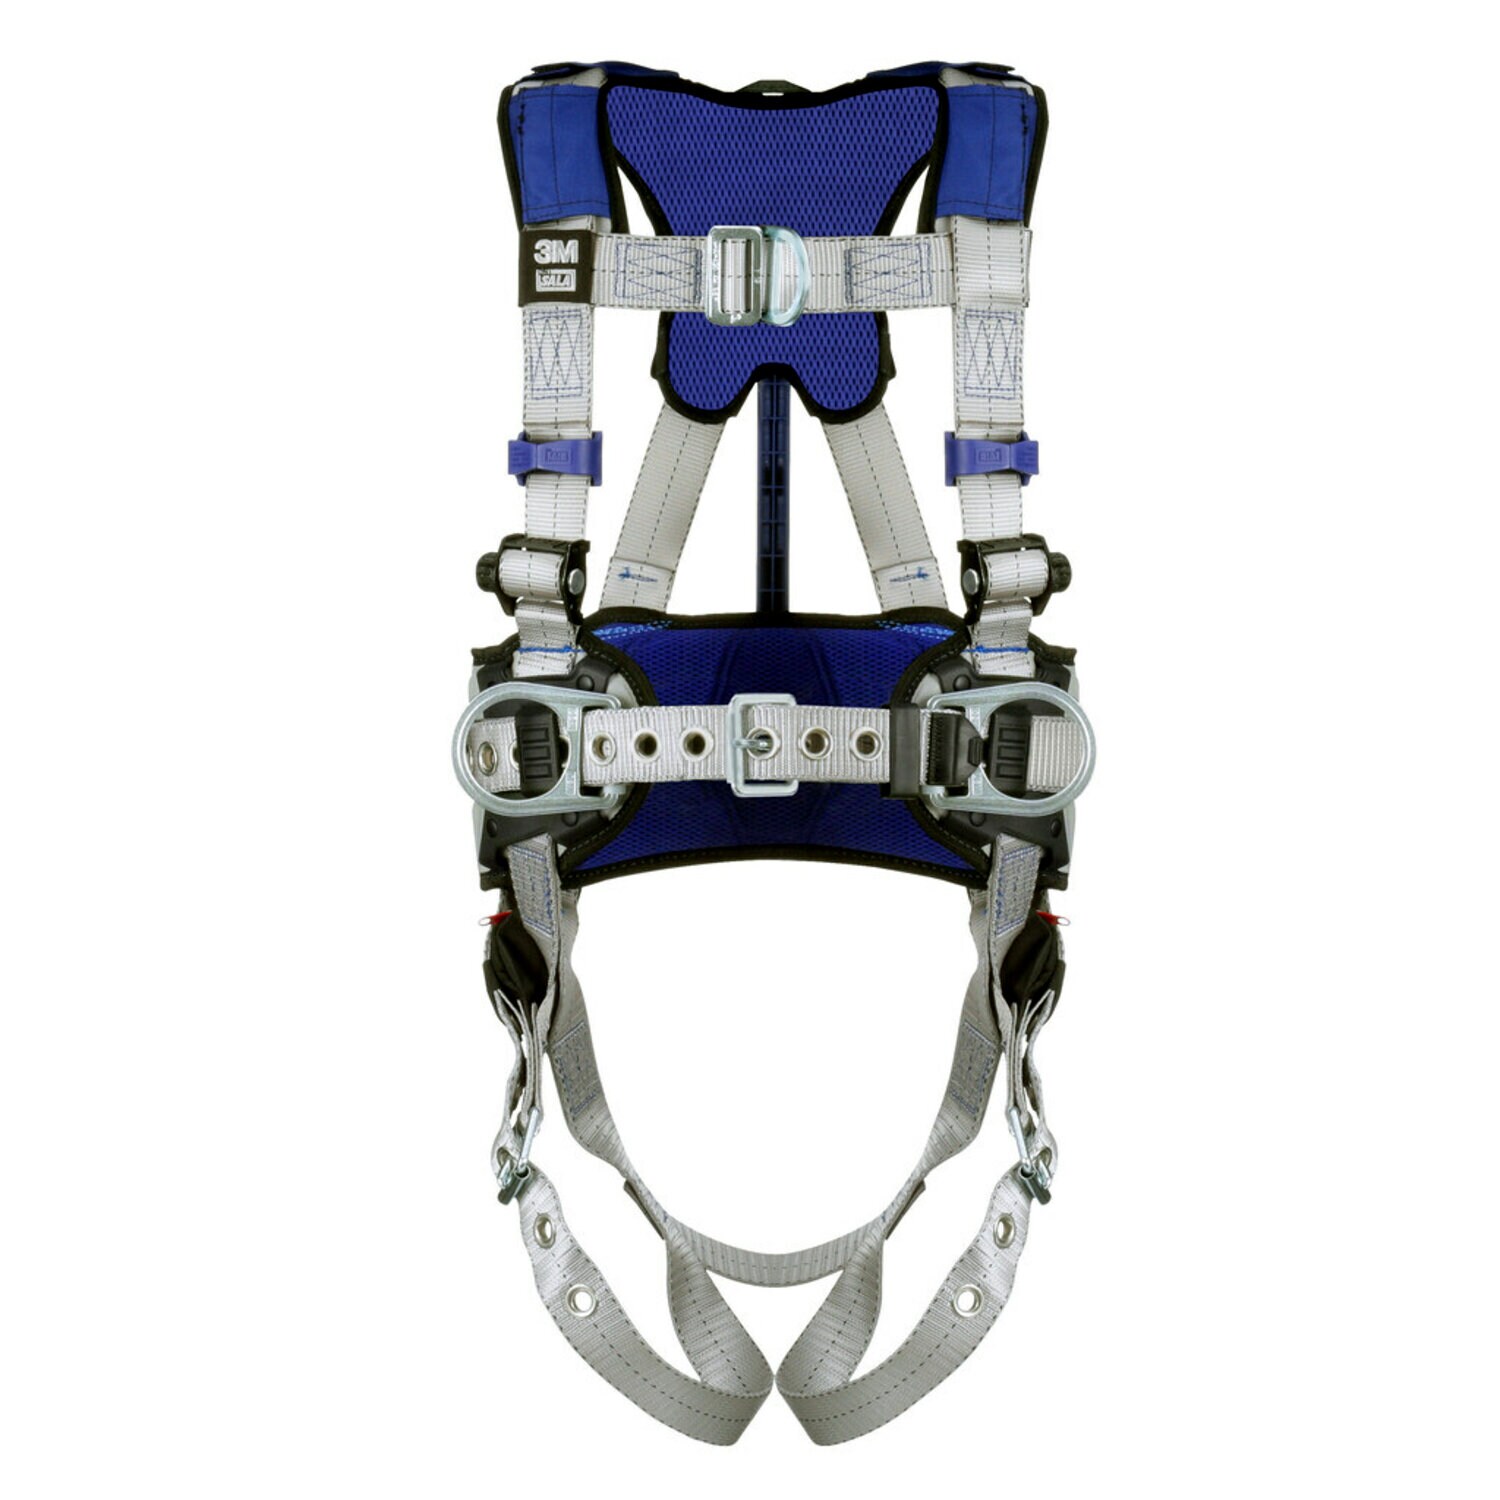 7012817524 - 3M DBI-SALA ExoFit X100 Comfort Construction Climbing/Positioning Safety Harness 1401048, Large